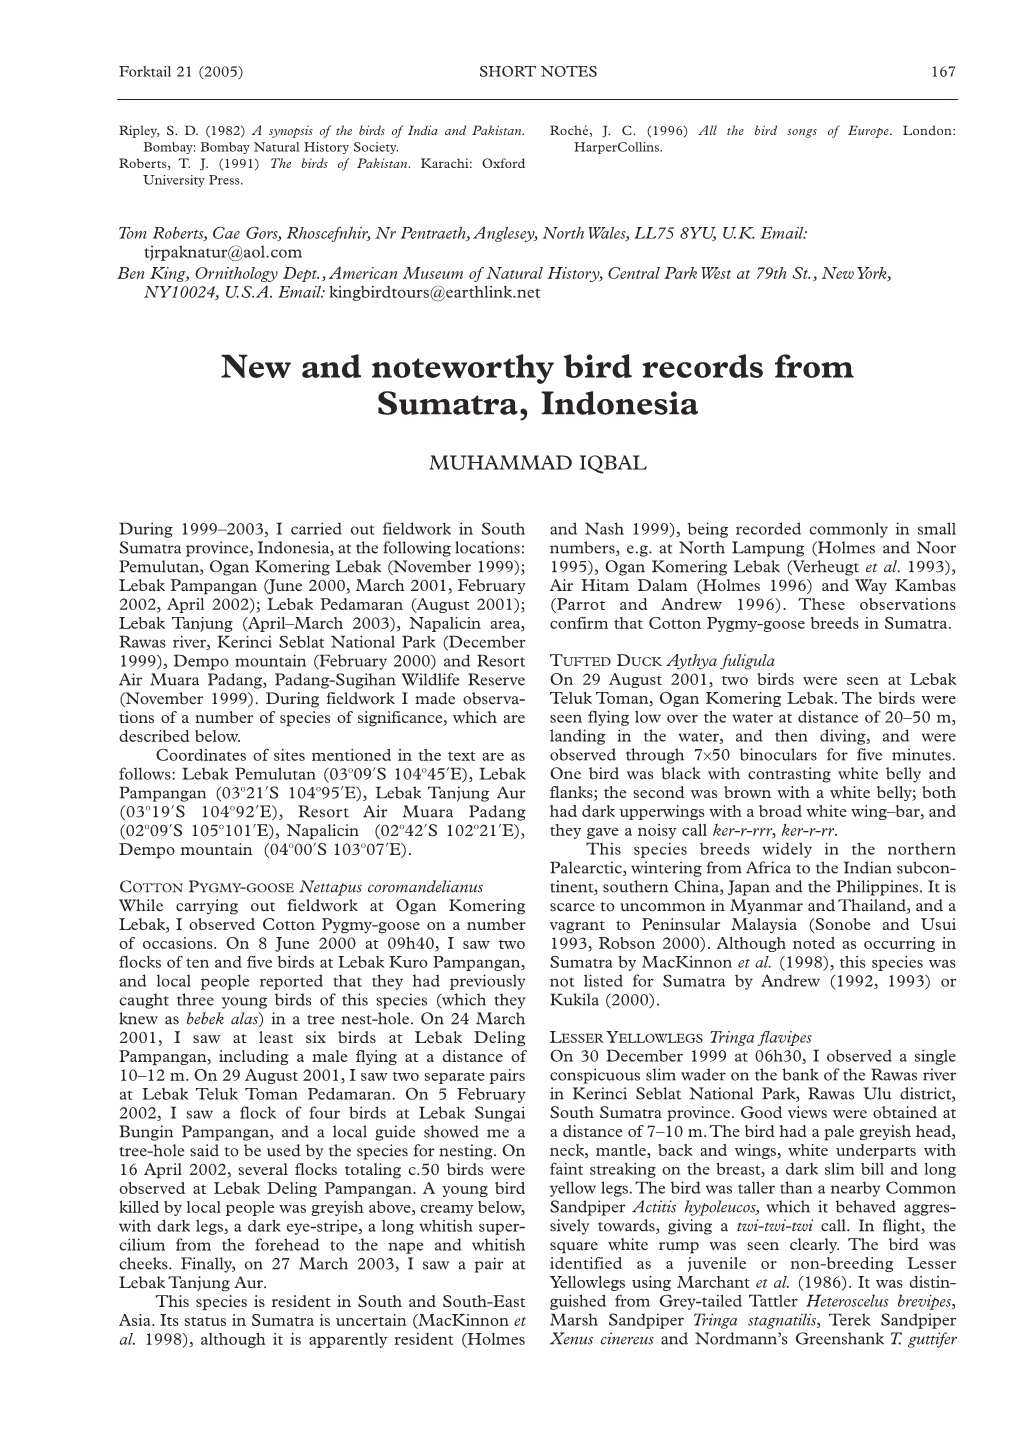 New and Noteworthy Bird Records from Sumatra, Indonesia